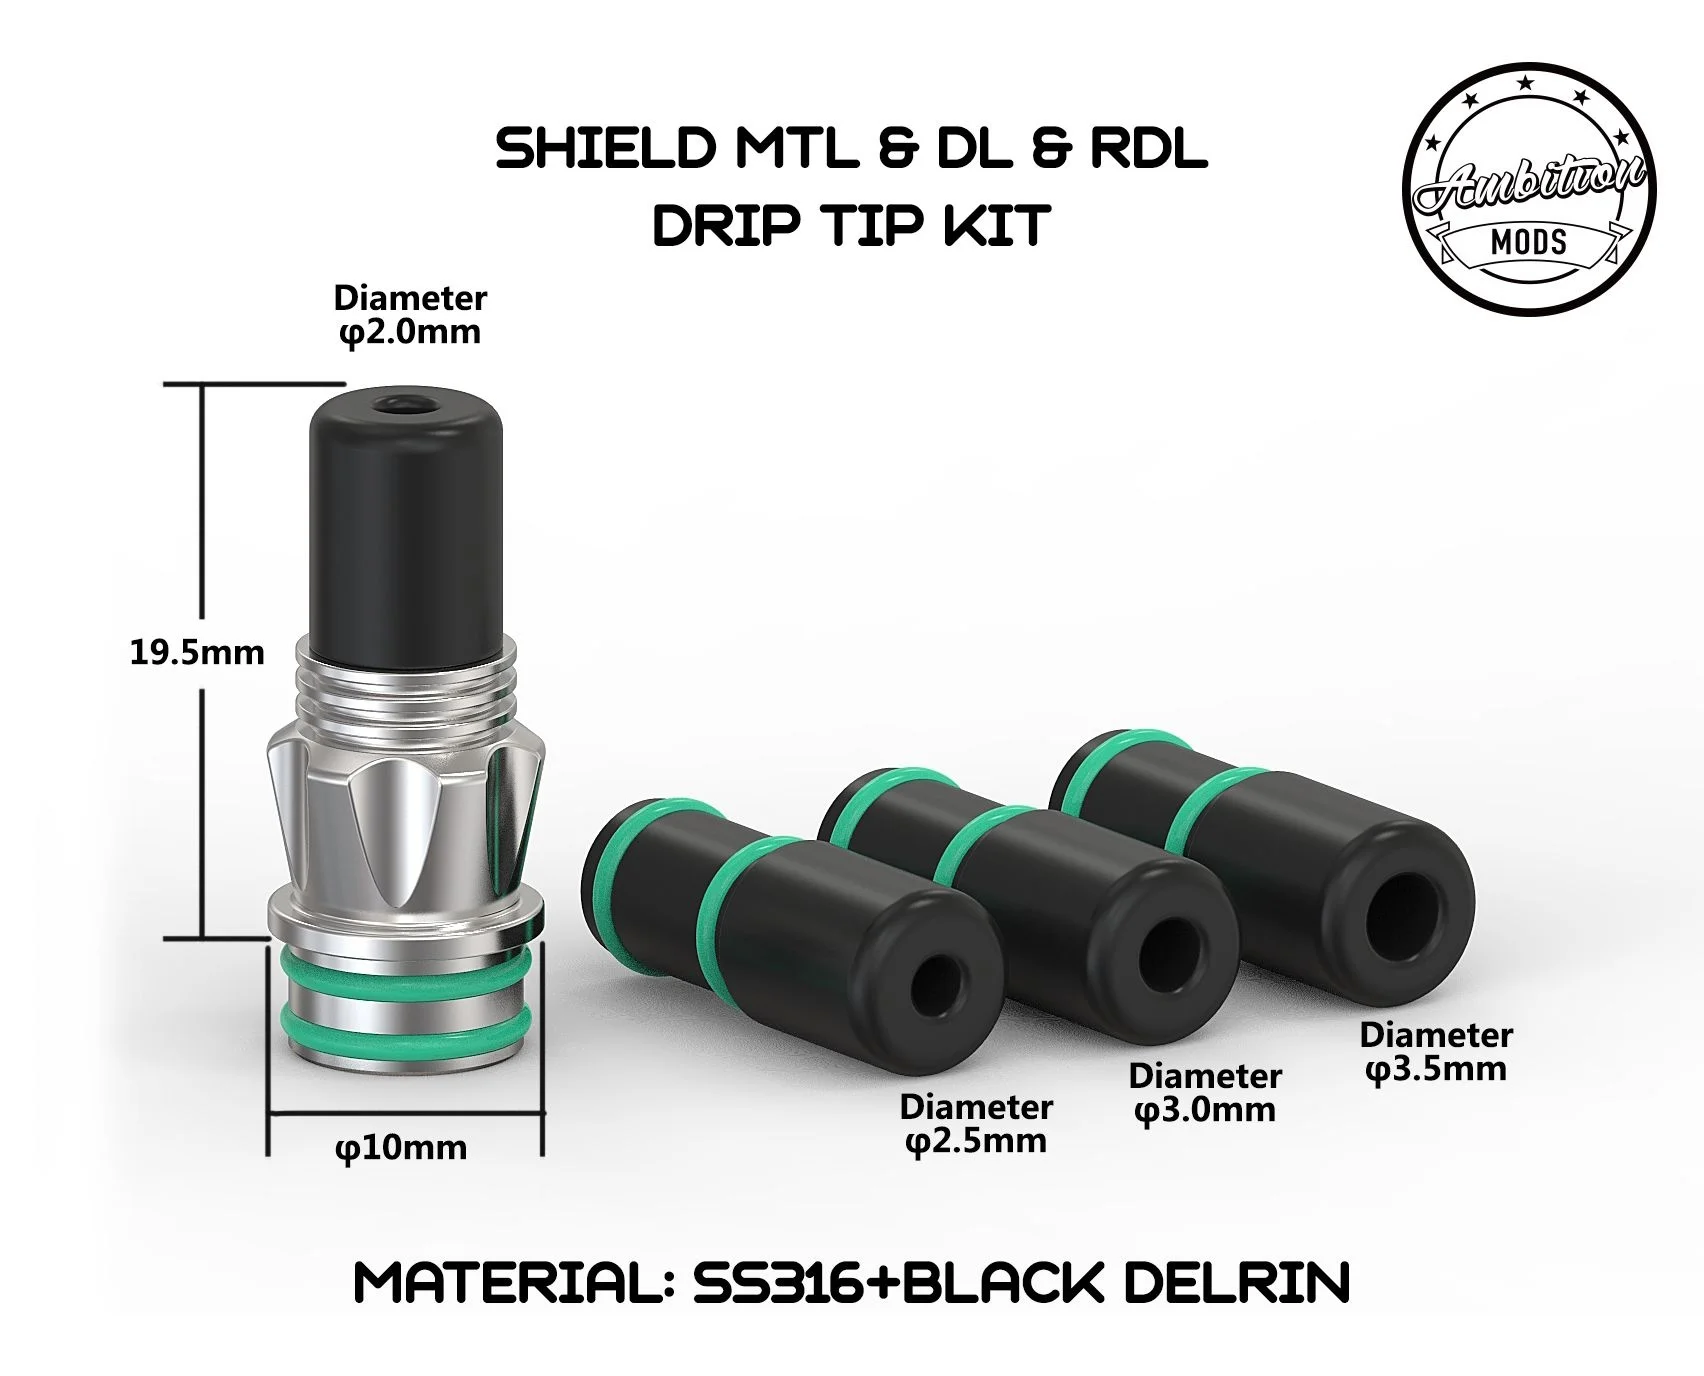 

YFTK Ambition Mods Shield MTL&DL&RDL Drip Tip Kit 3 In 1 2.0mm/2.5mm/3.0mm/3.5mm Diameter Hole for BB Mod Billet Box